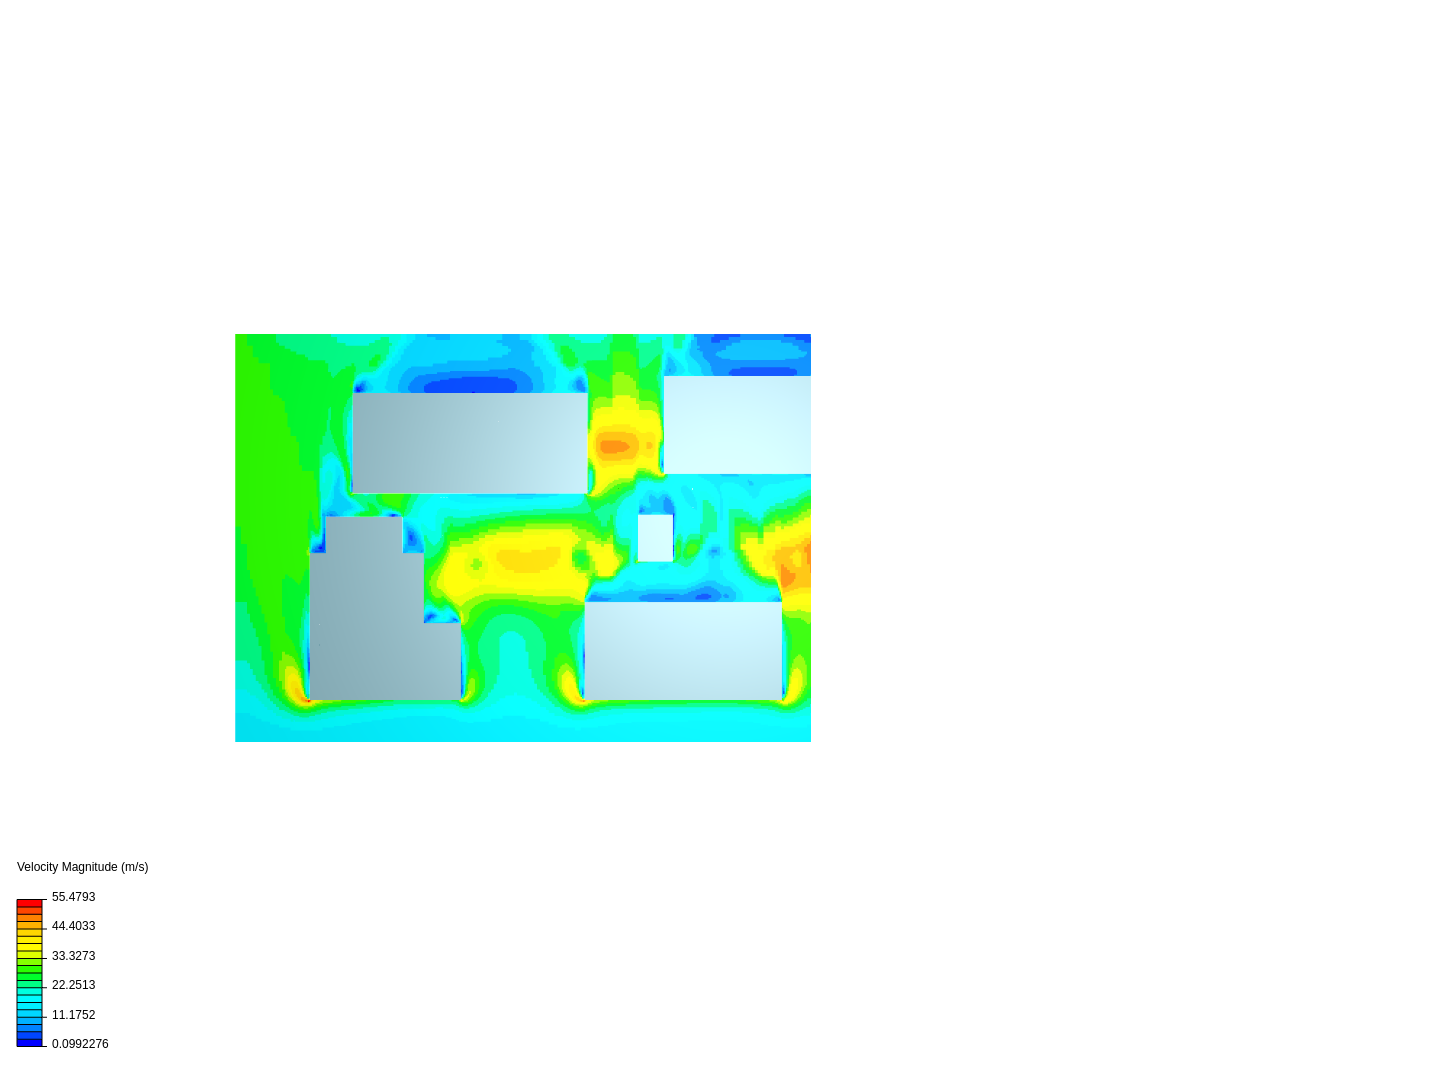 Wind/air flow simulation image